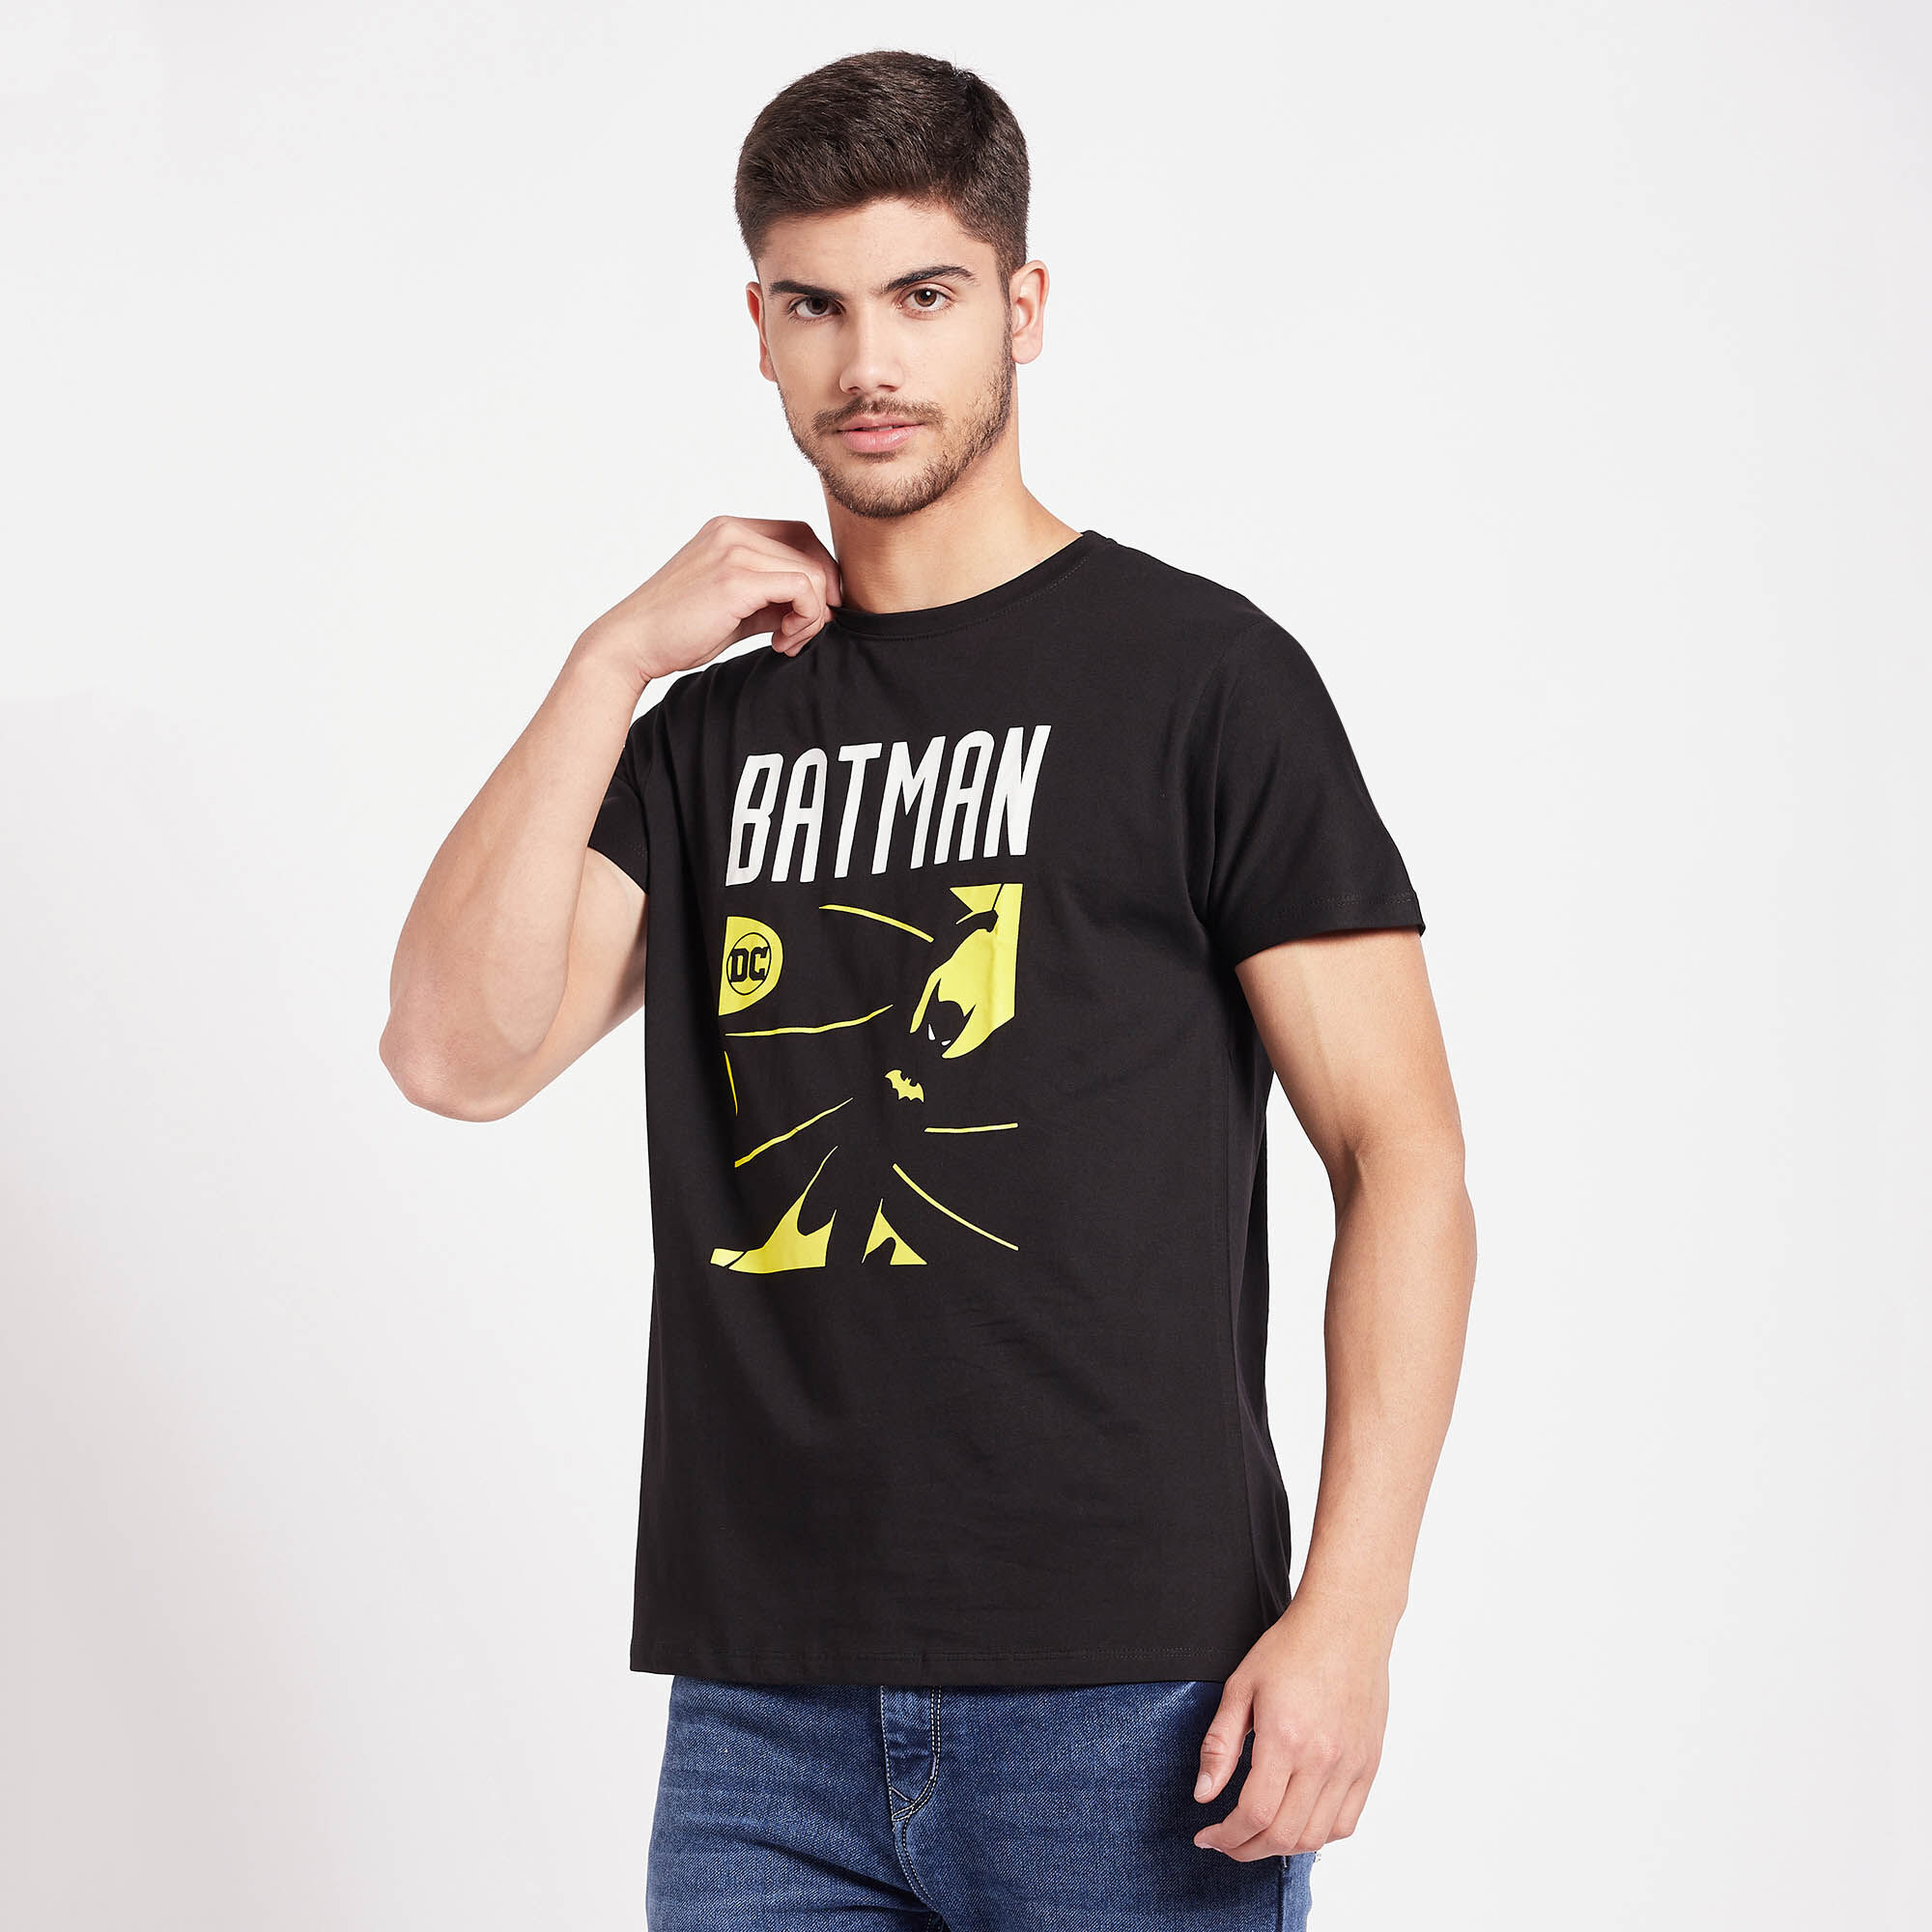 Buy The Eagle Batman T-Shirt Batman1 (Small, Blue) at Amazon.in